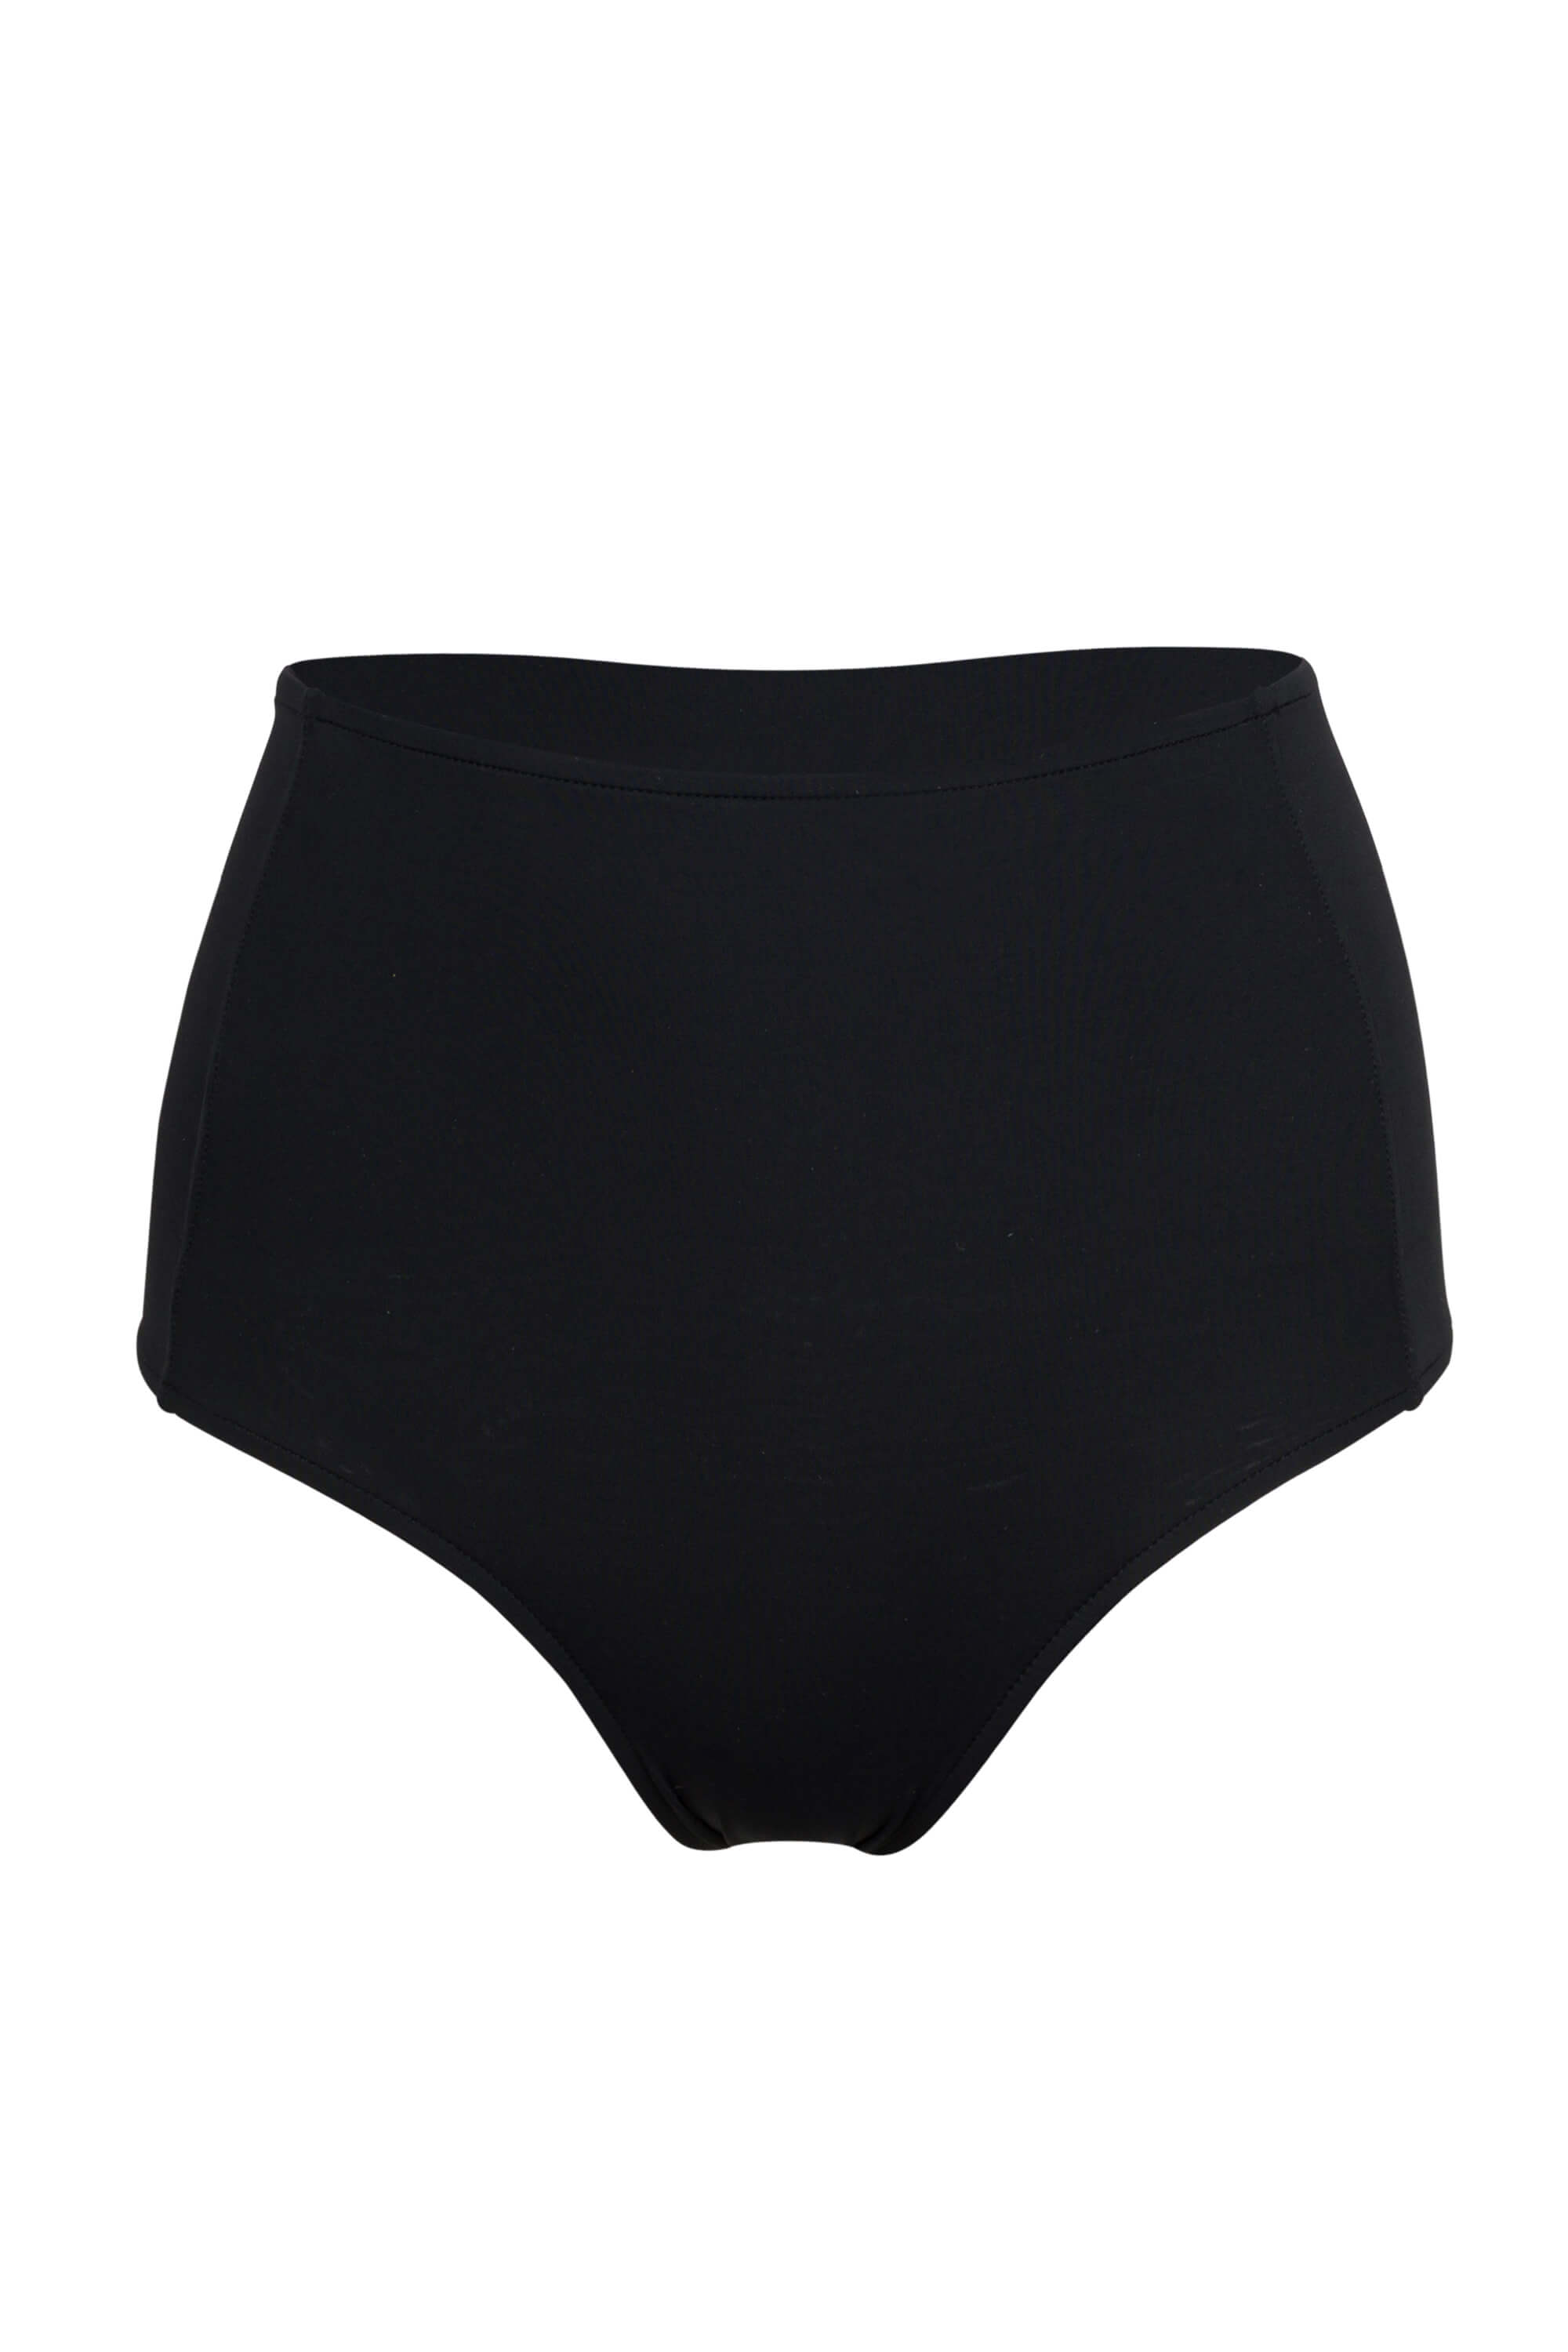 The Bianca high waisted bikini bottom in black by Sauipe Swim. Shop designer two piece swimsuits, one piece swimsuits, bikini tops, bikini bottoms and beach cover-ups. 